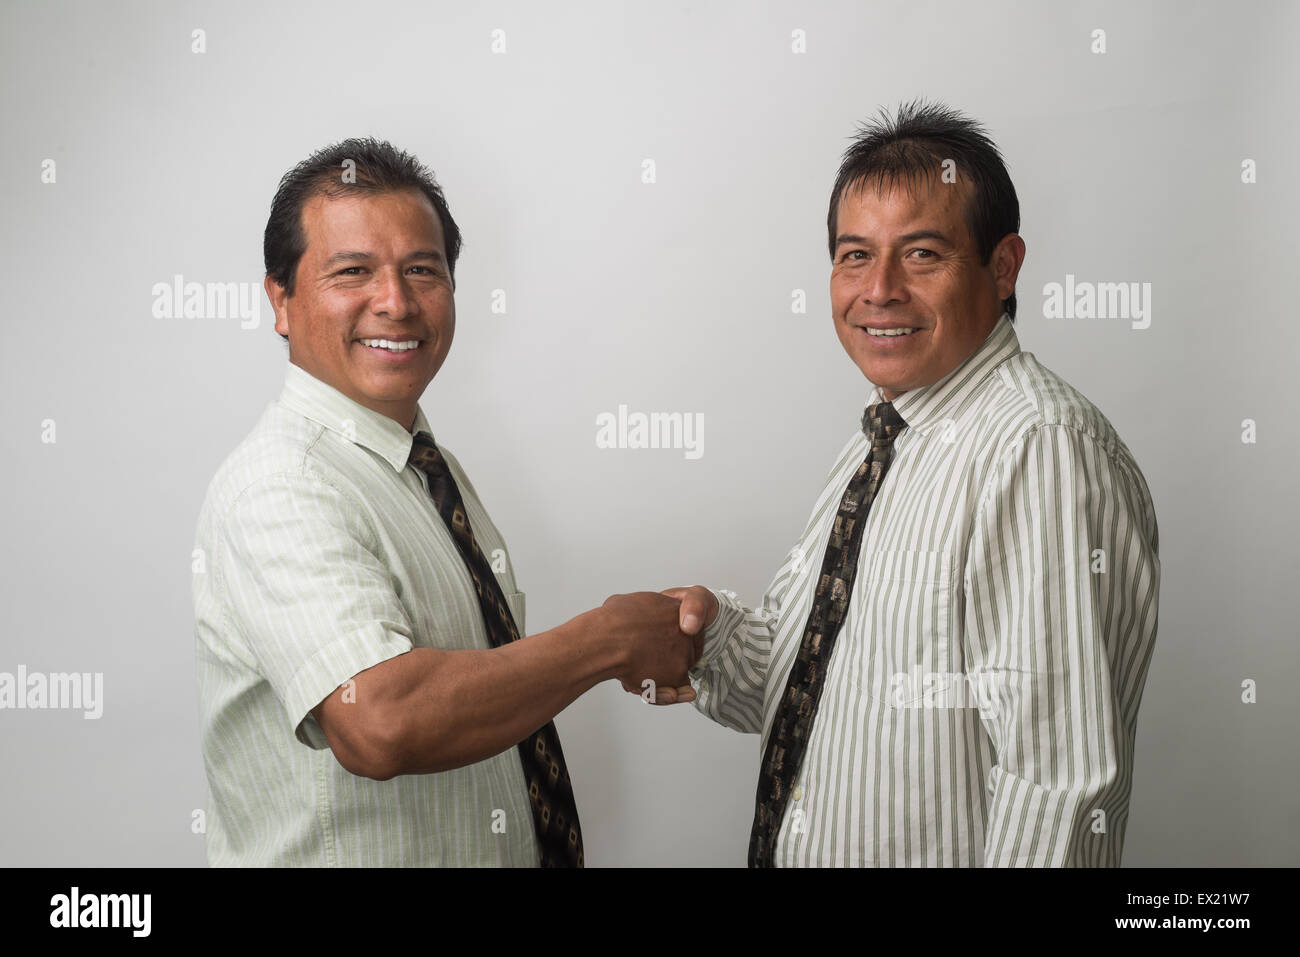 Hispanic businessmen shaking hands, negotiating and smiling. Stock Photo